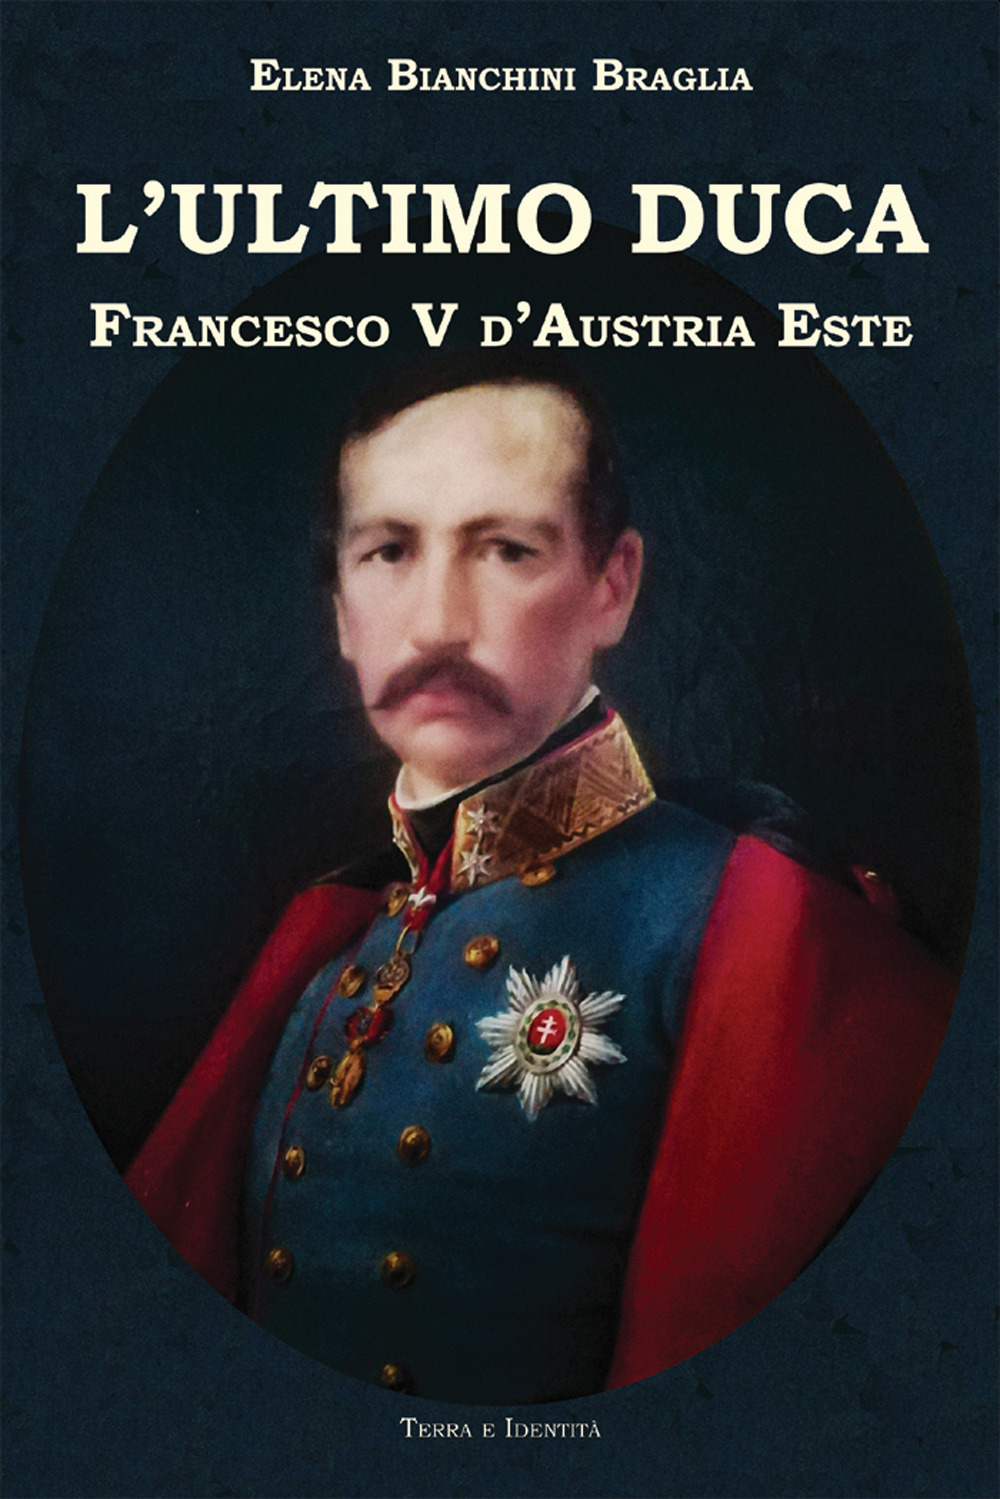 L'ultimo duca. Francesco V d'Austria Este